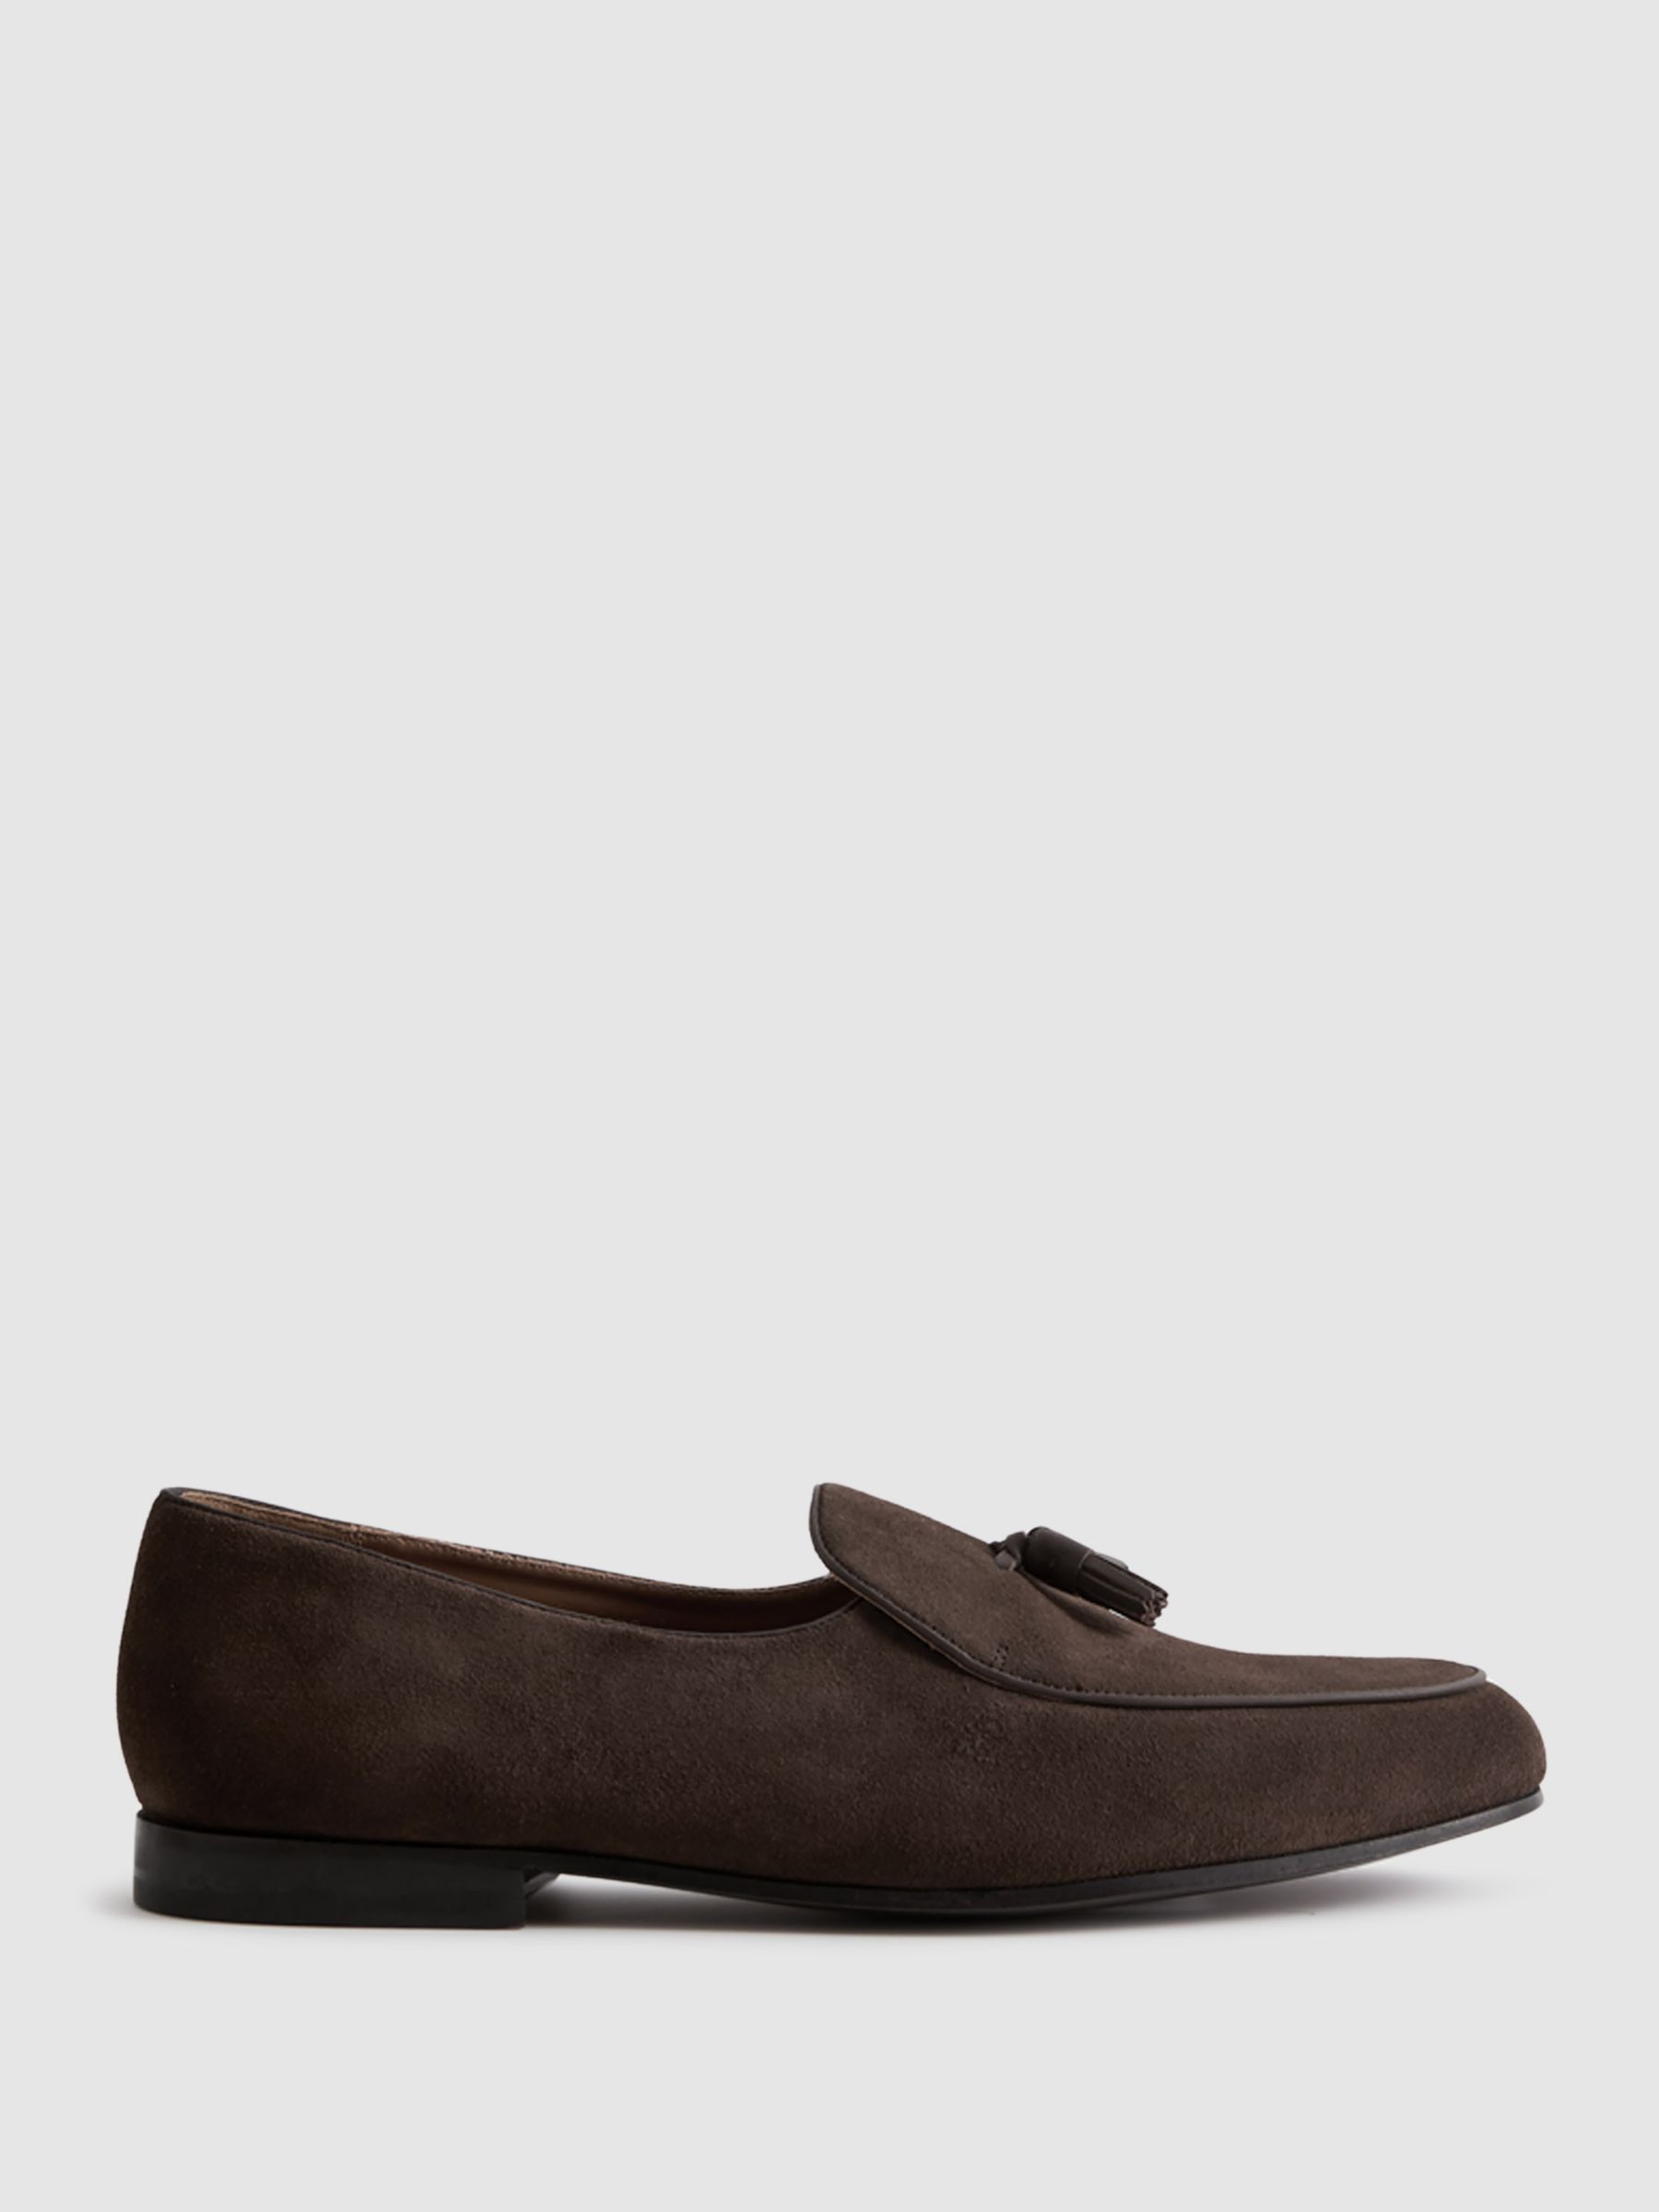 Reiss Harry Leather Tassel Loafers, Dark Brown, 7